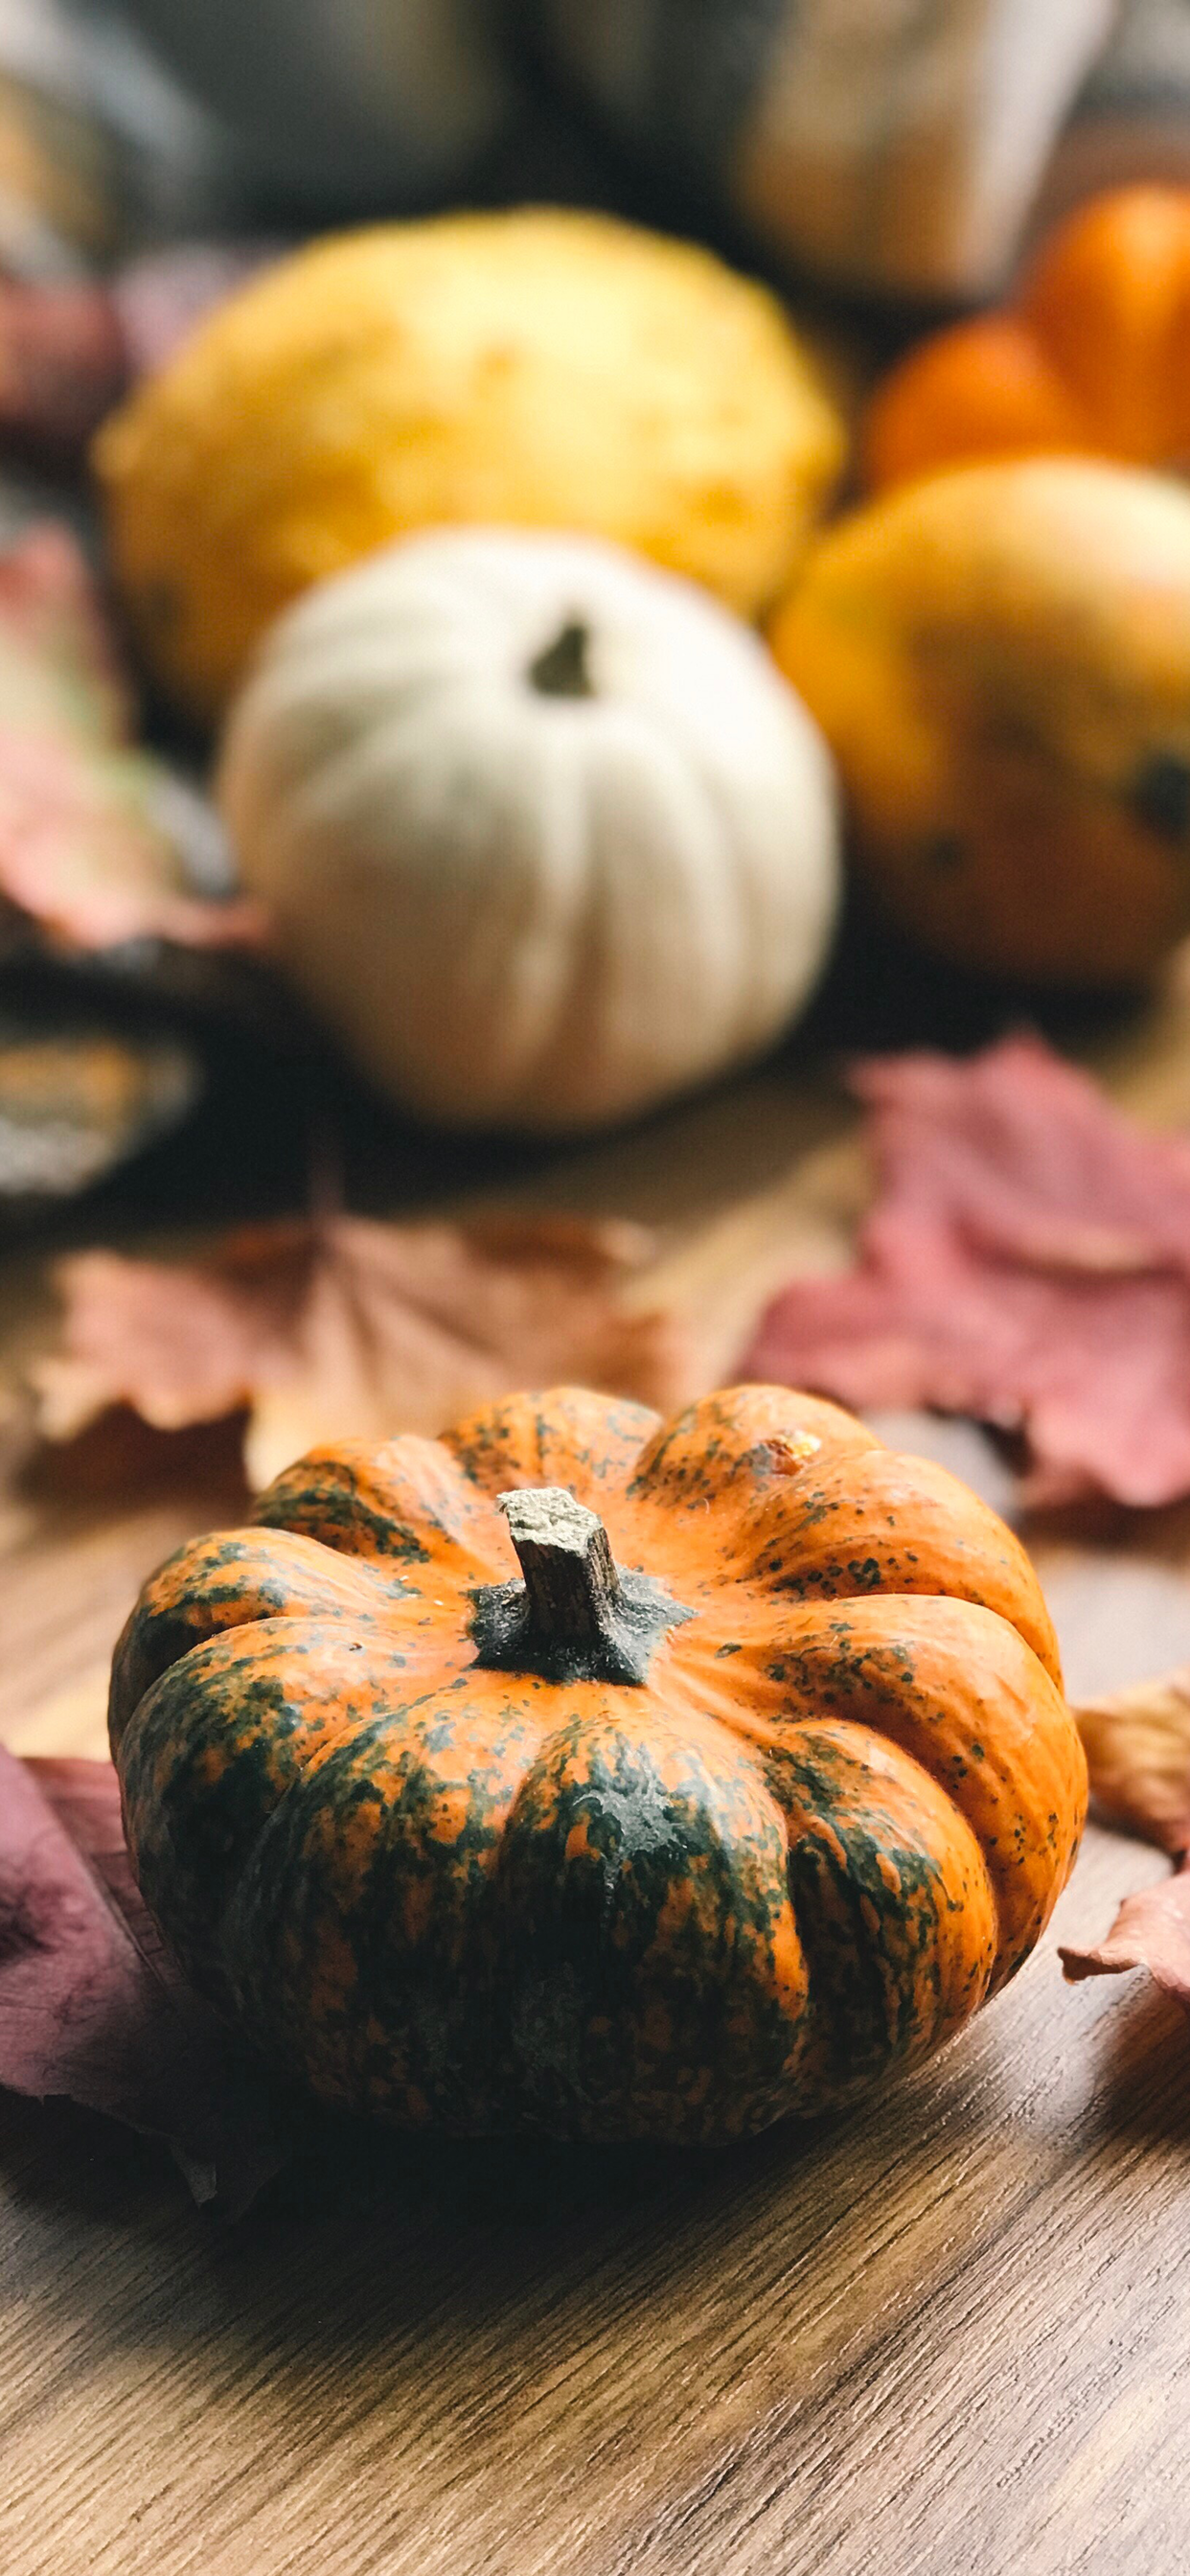 Autumn Pumpkin Iphone Wallpapers